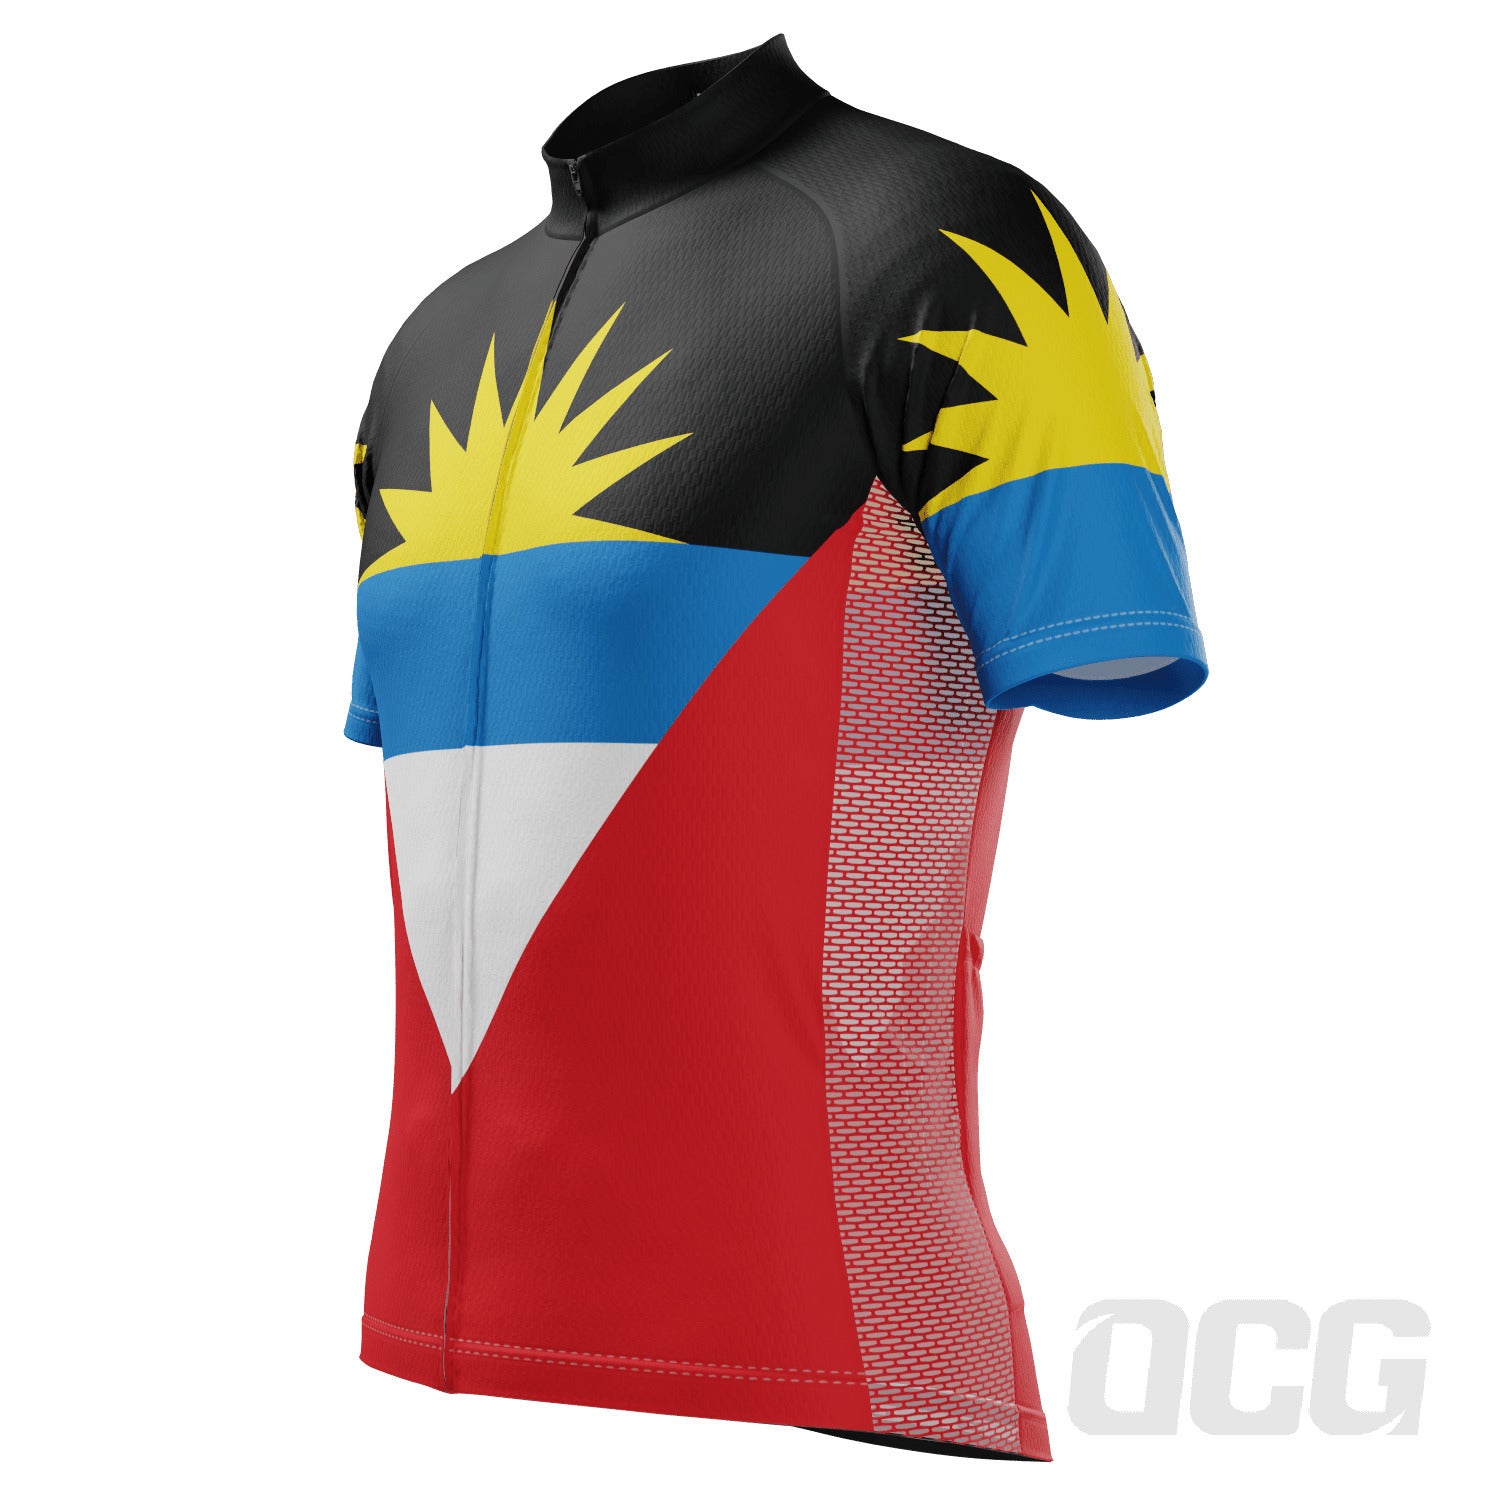 Men's Antigua and Barbuda National Flag Short Sleeve Cycling Jersey